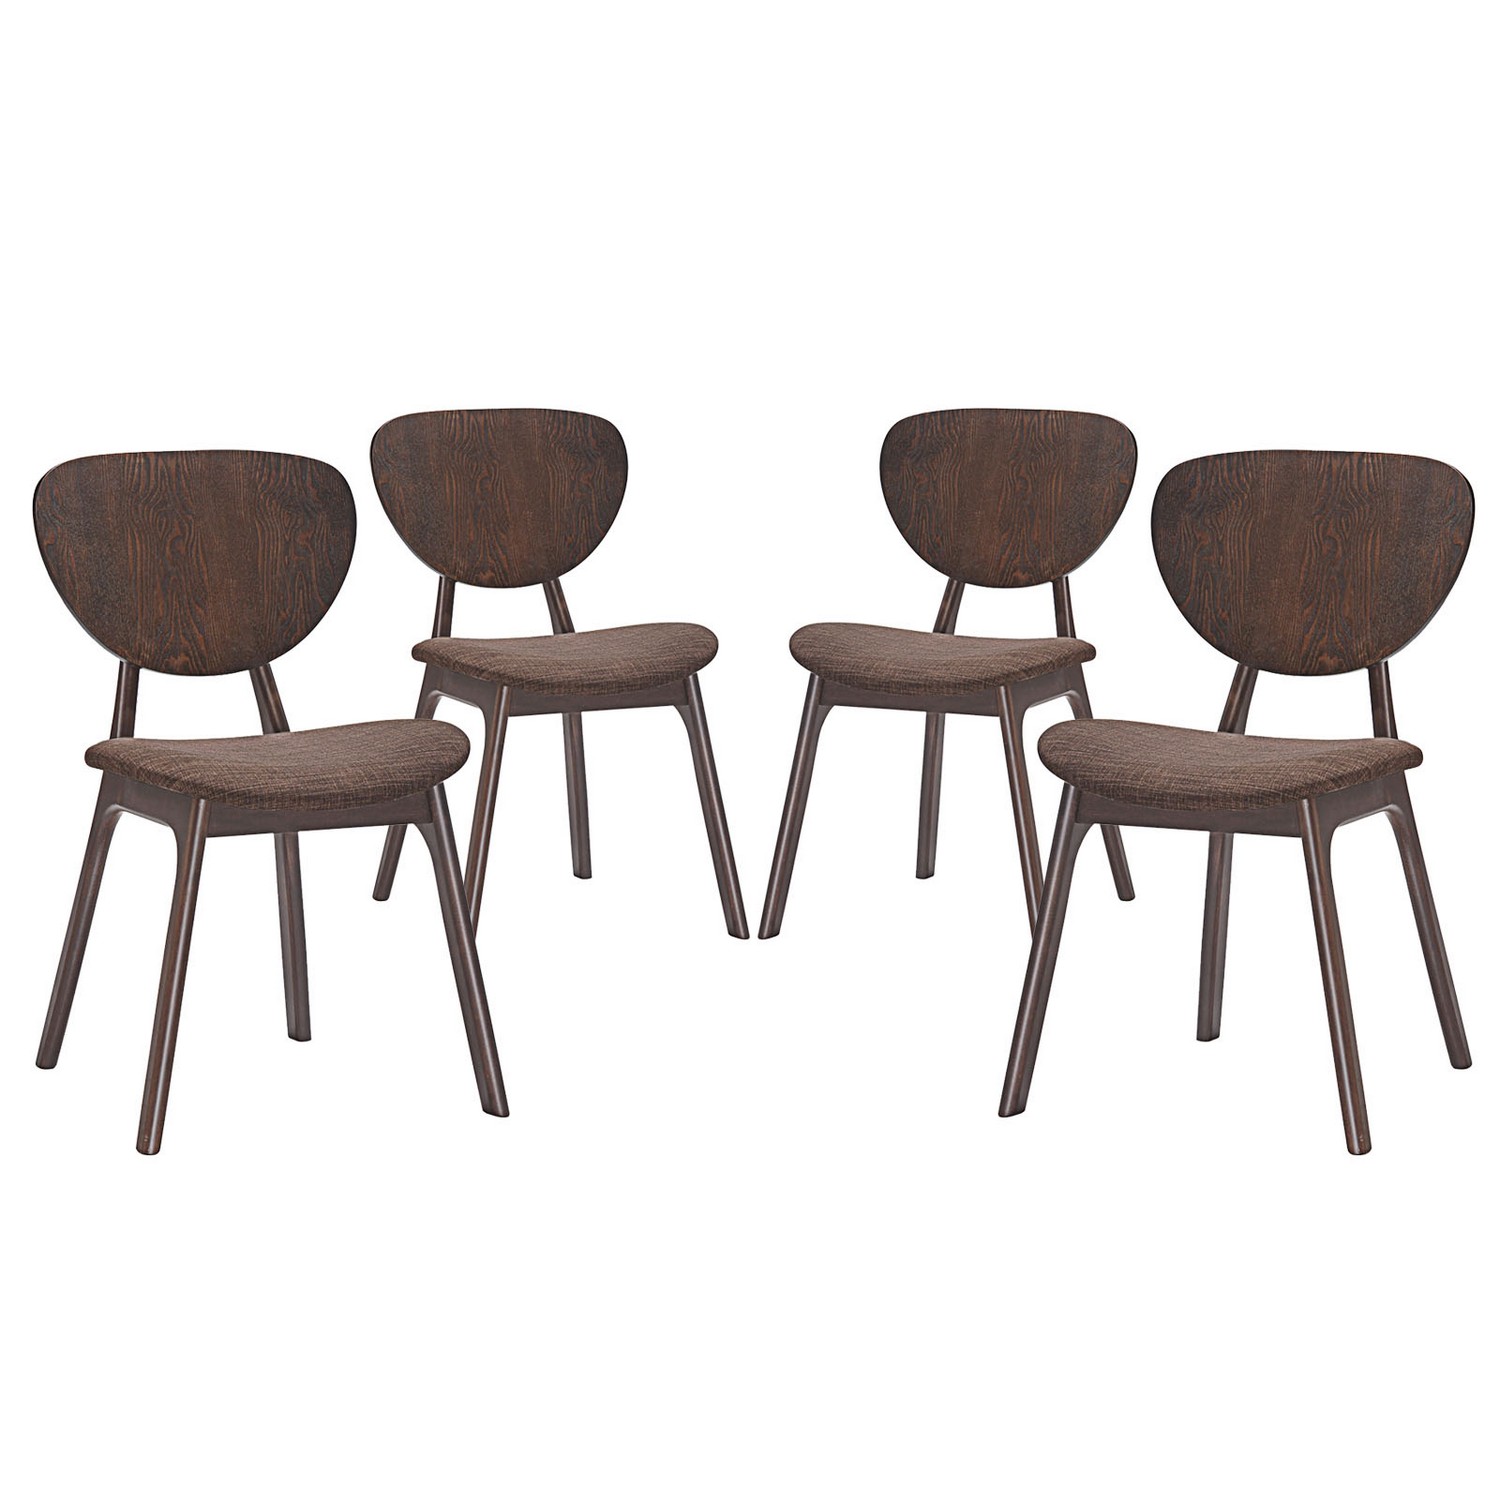 Modway Murmur Dining Side Chair Set of 4 - Walnut Brown